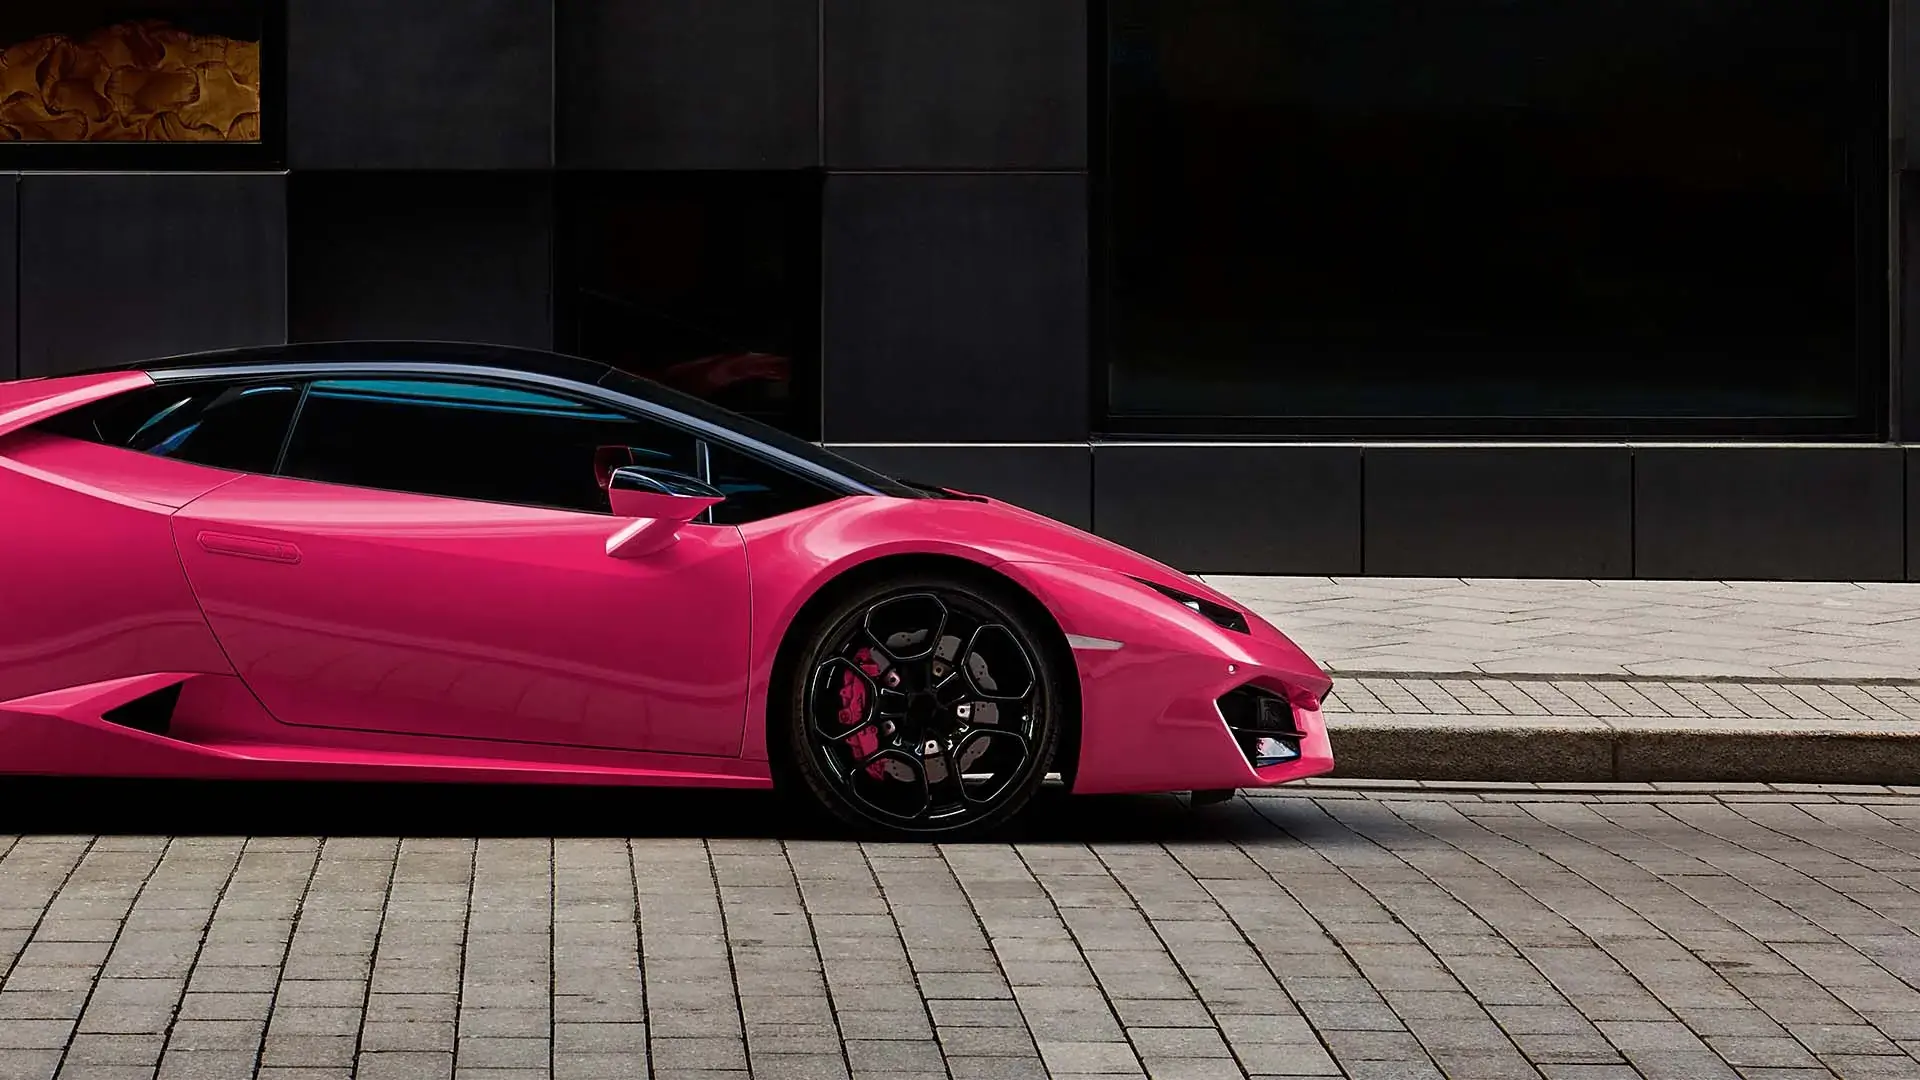 Pink luxury sports car on an empty urban street.